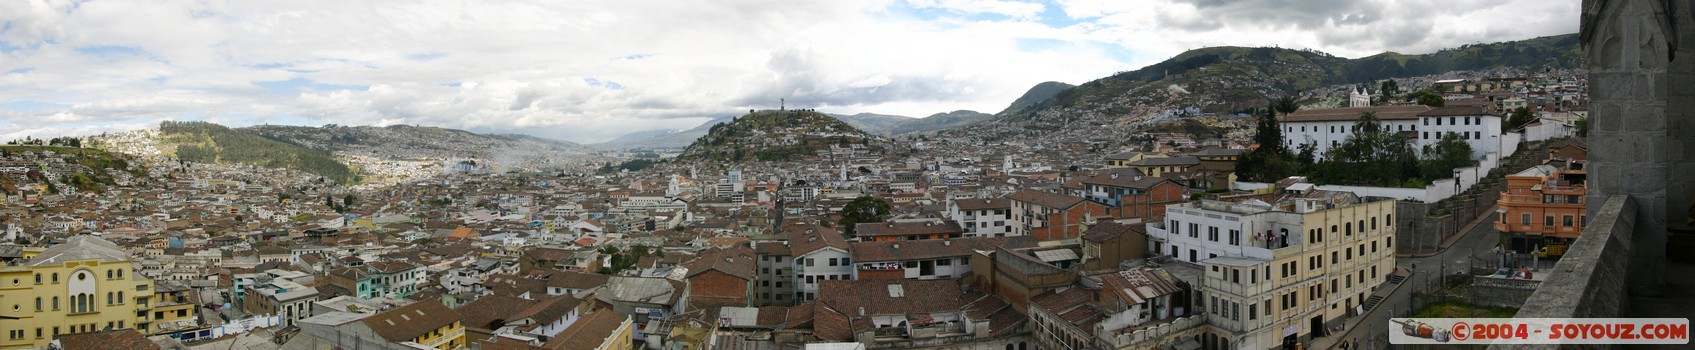 Quito - Basilica del Sagrado Voto Nacional - panoramique de la ville
Mots-clés: Ecuador Eglise panorama